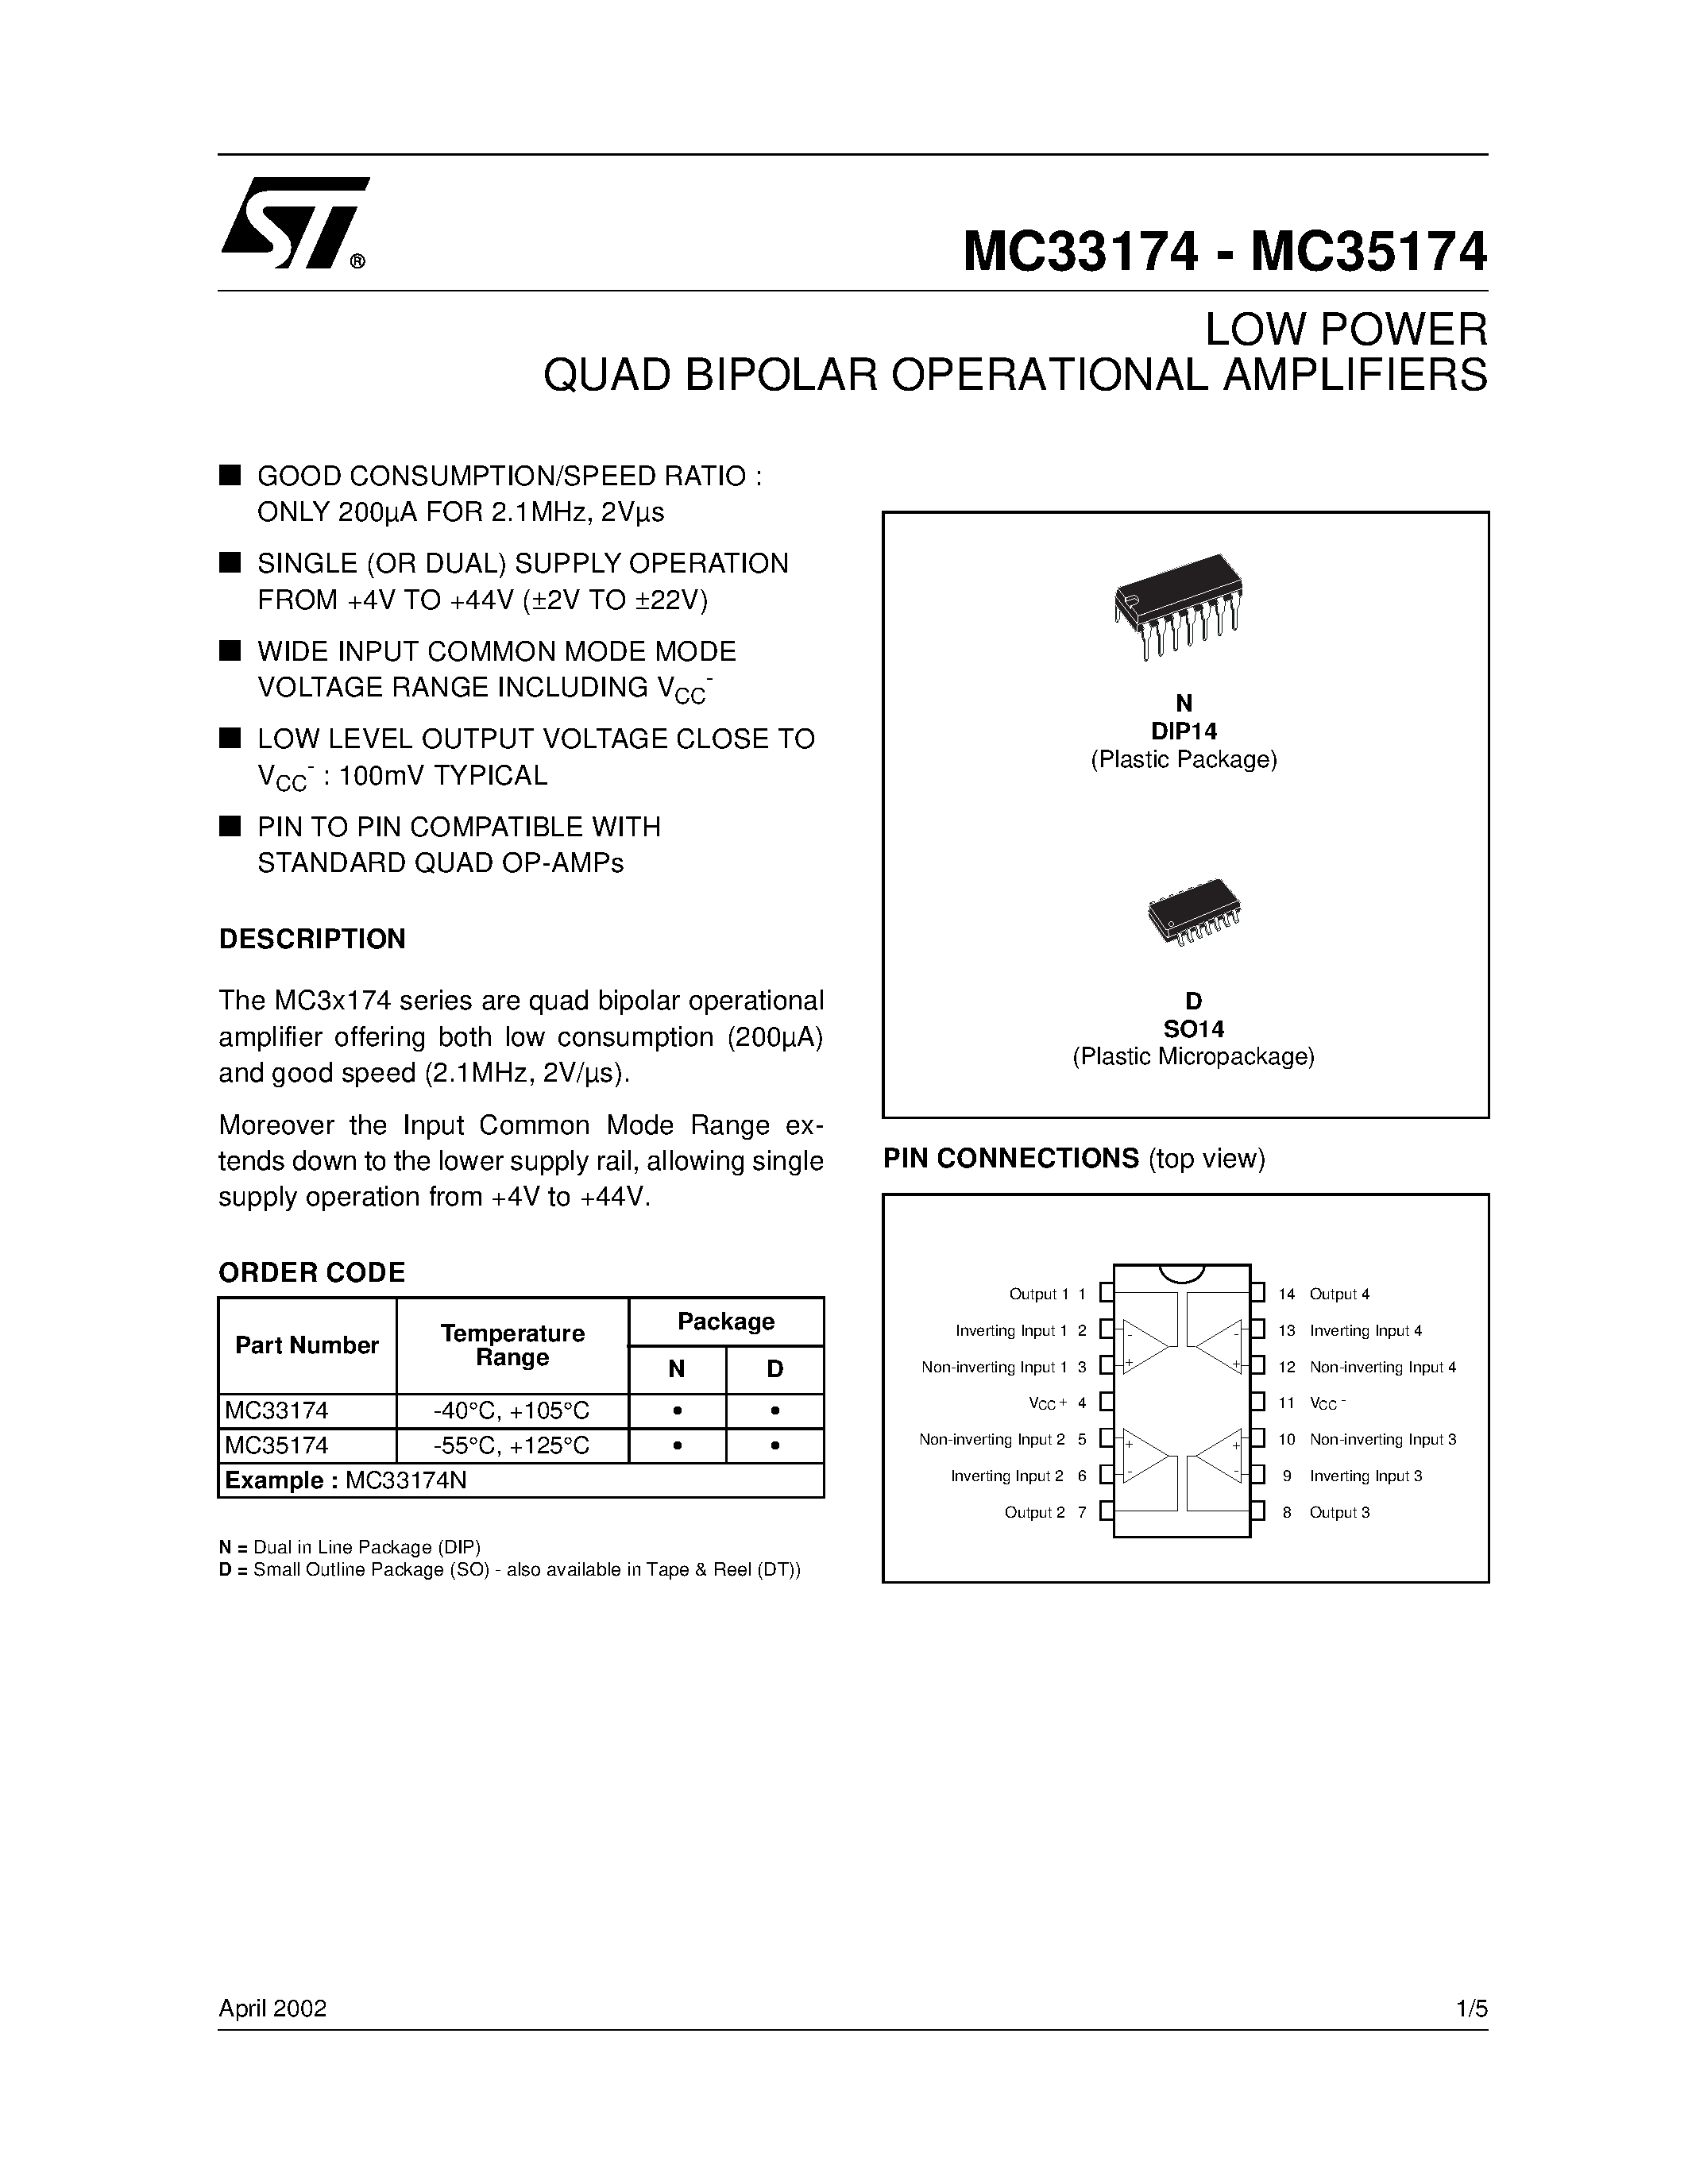 Datasheet MC33174 - LOW POWER QUAD BIPOLAR OPERATIONAL AMPLIFIERS page 1